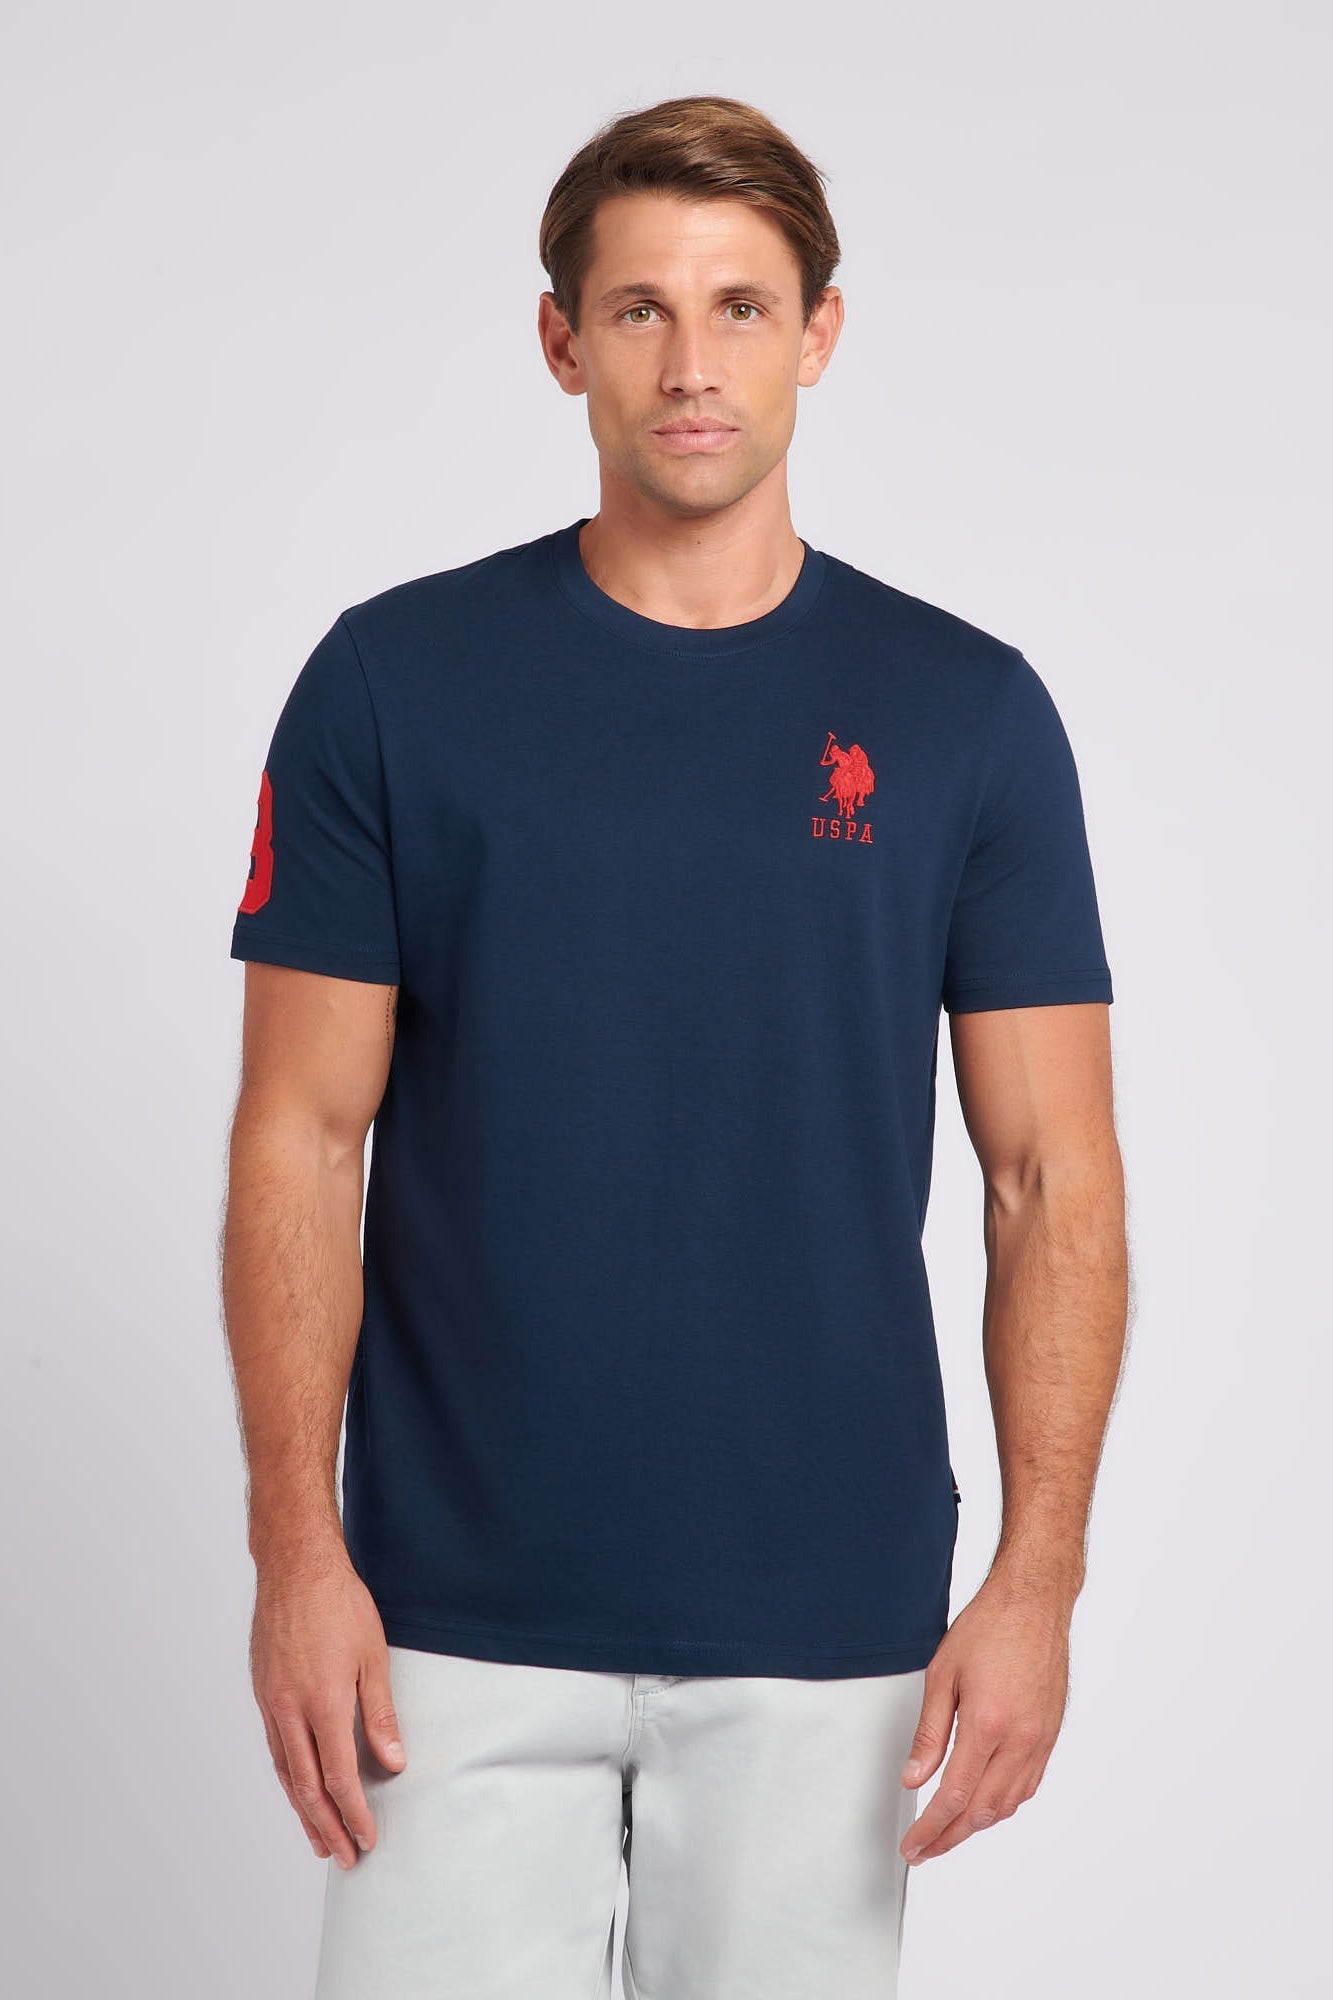 U.S. Polo Assn. Mens Player 3 T-Shirt in Dark Sapphire Navy / Haute Red DHM